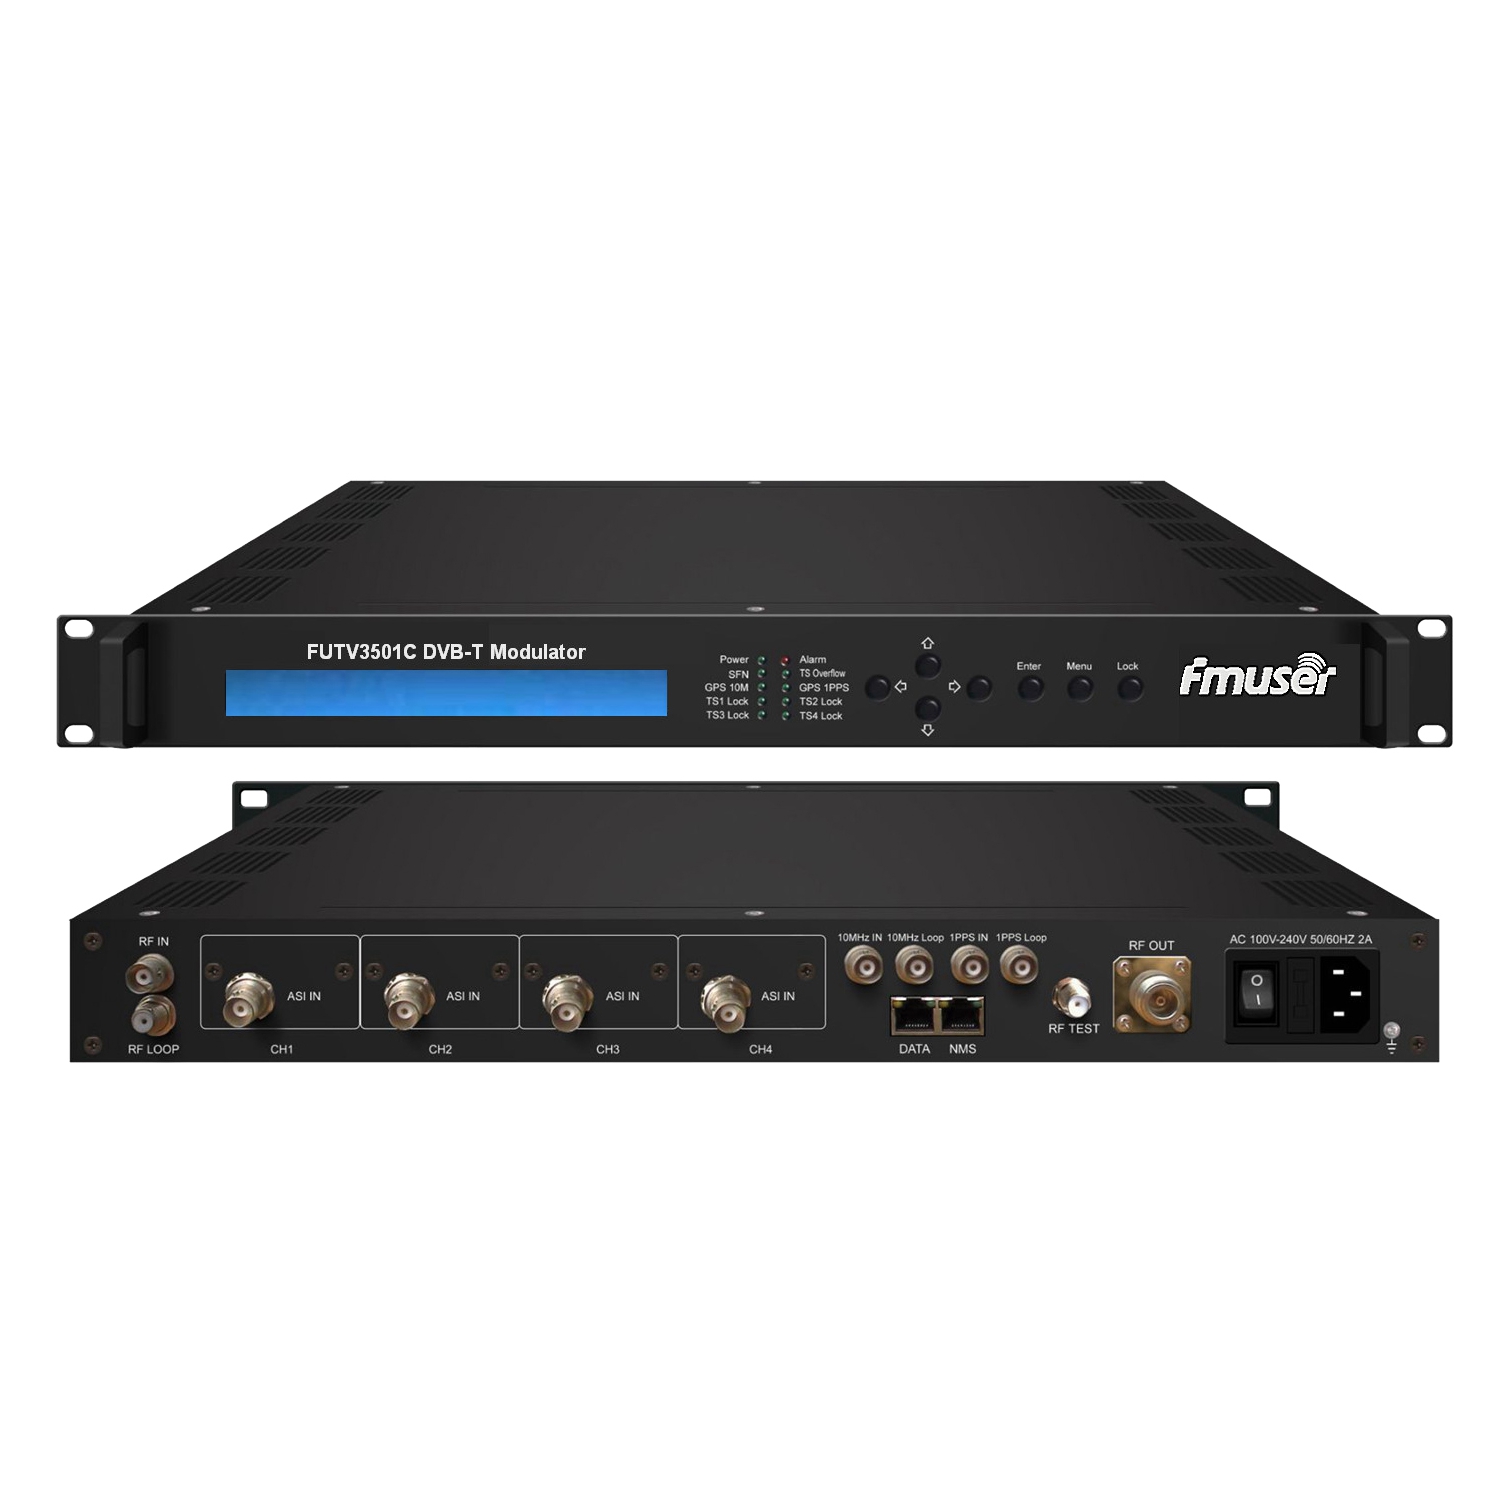 FMUSER FUTV3501C DVB-T modulátor (4 * ASI in, 1 * RF DPD out, DVB-T standard) s dálkovým ovládáním